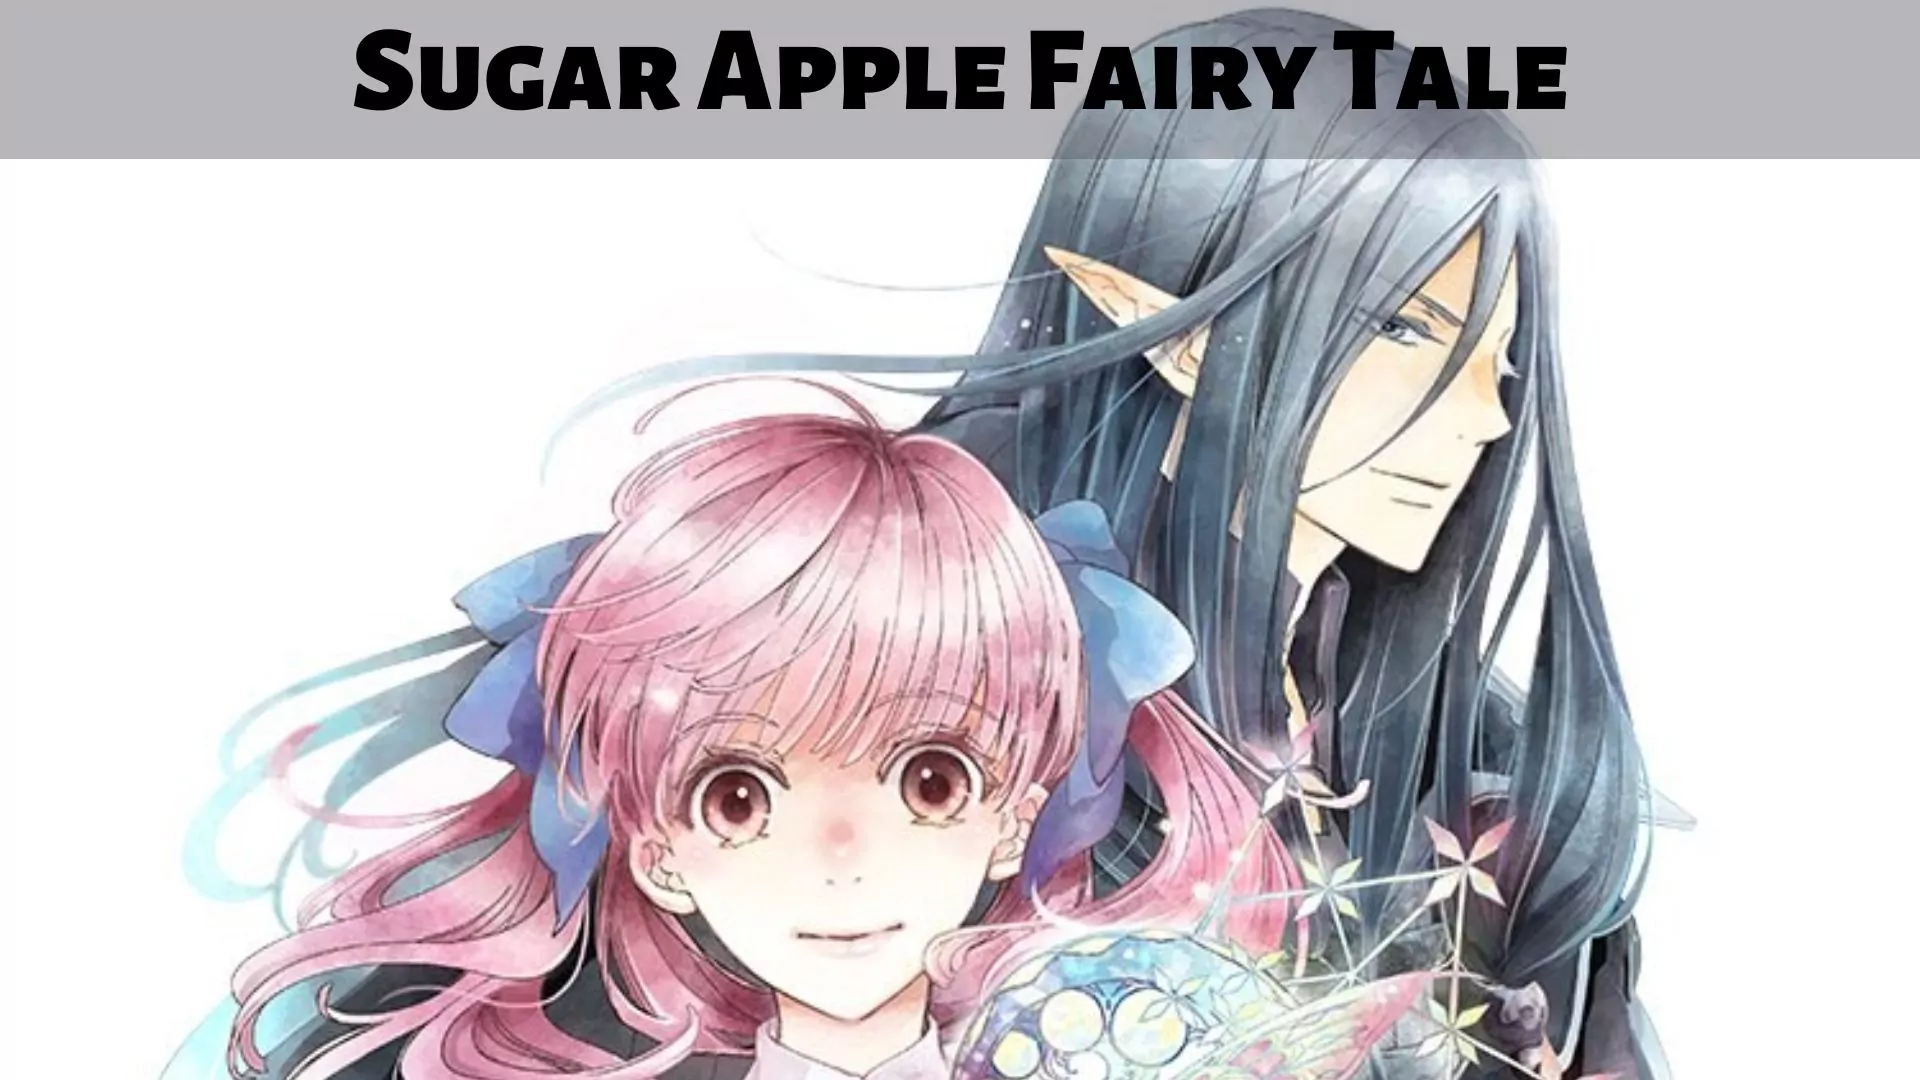 Sugar Apple Fairy Tale - Wikipedia